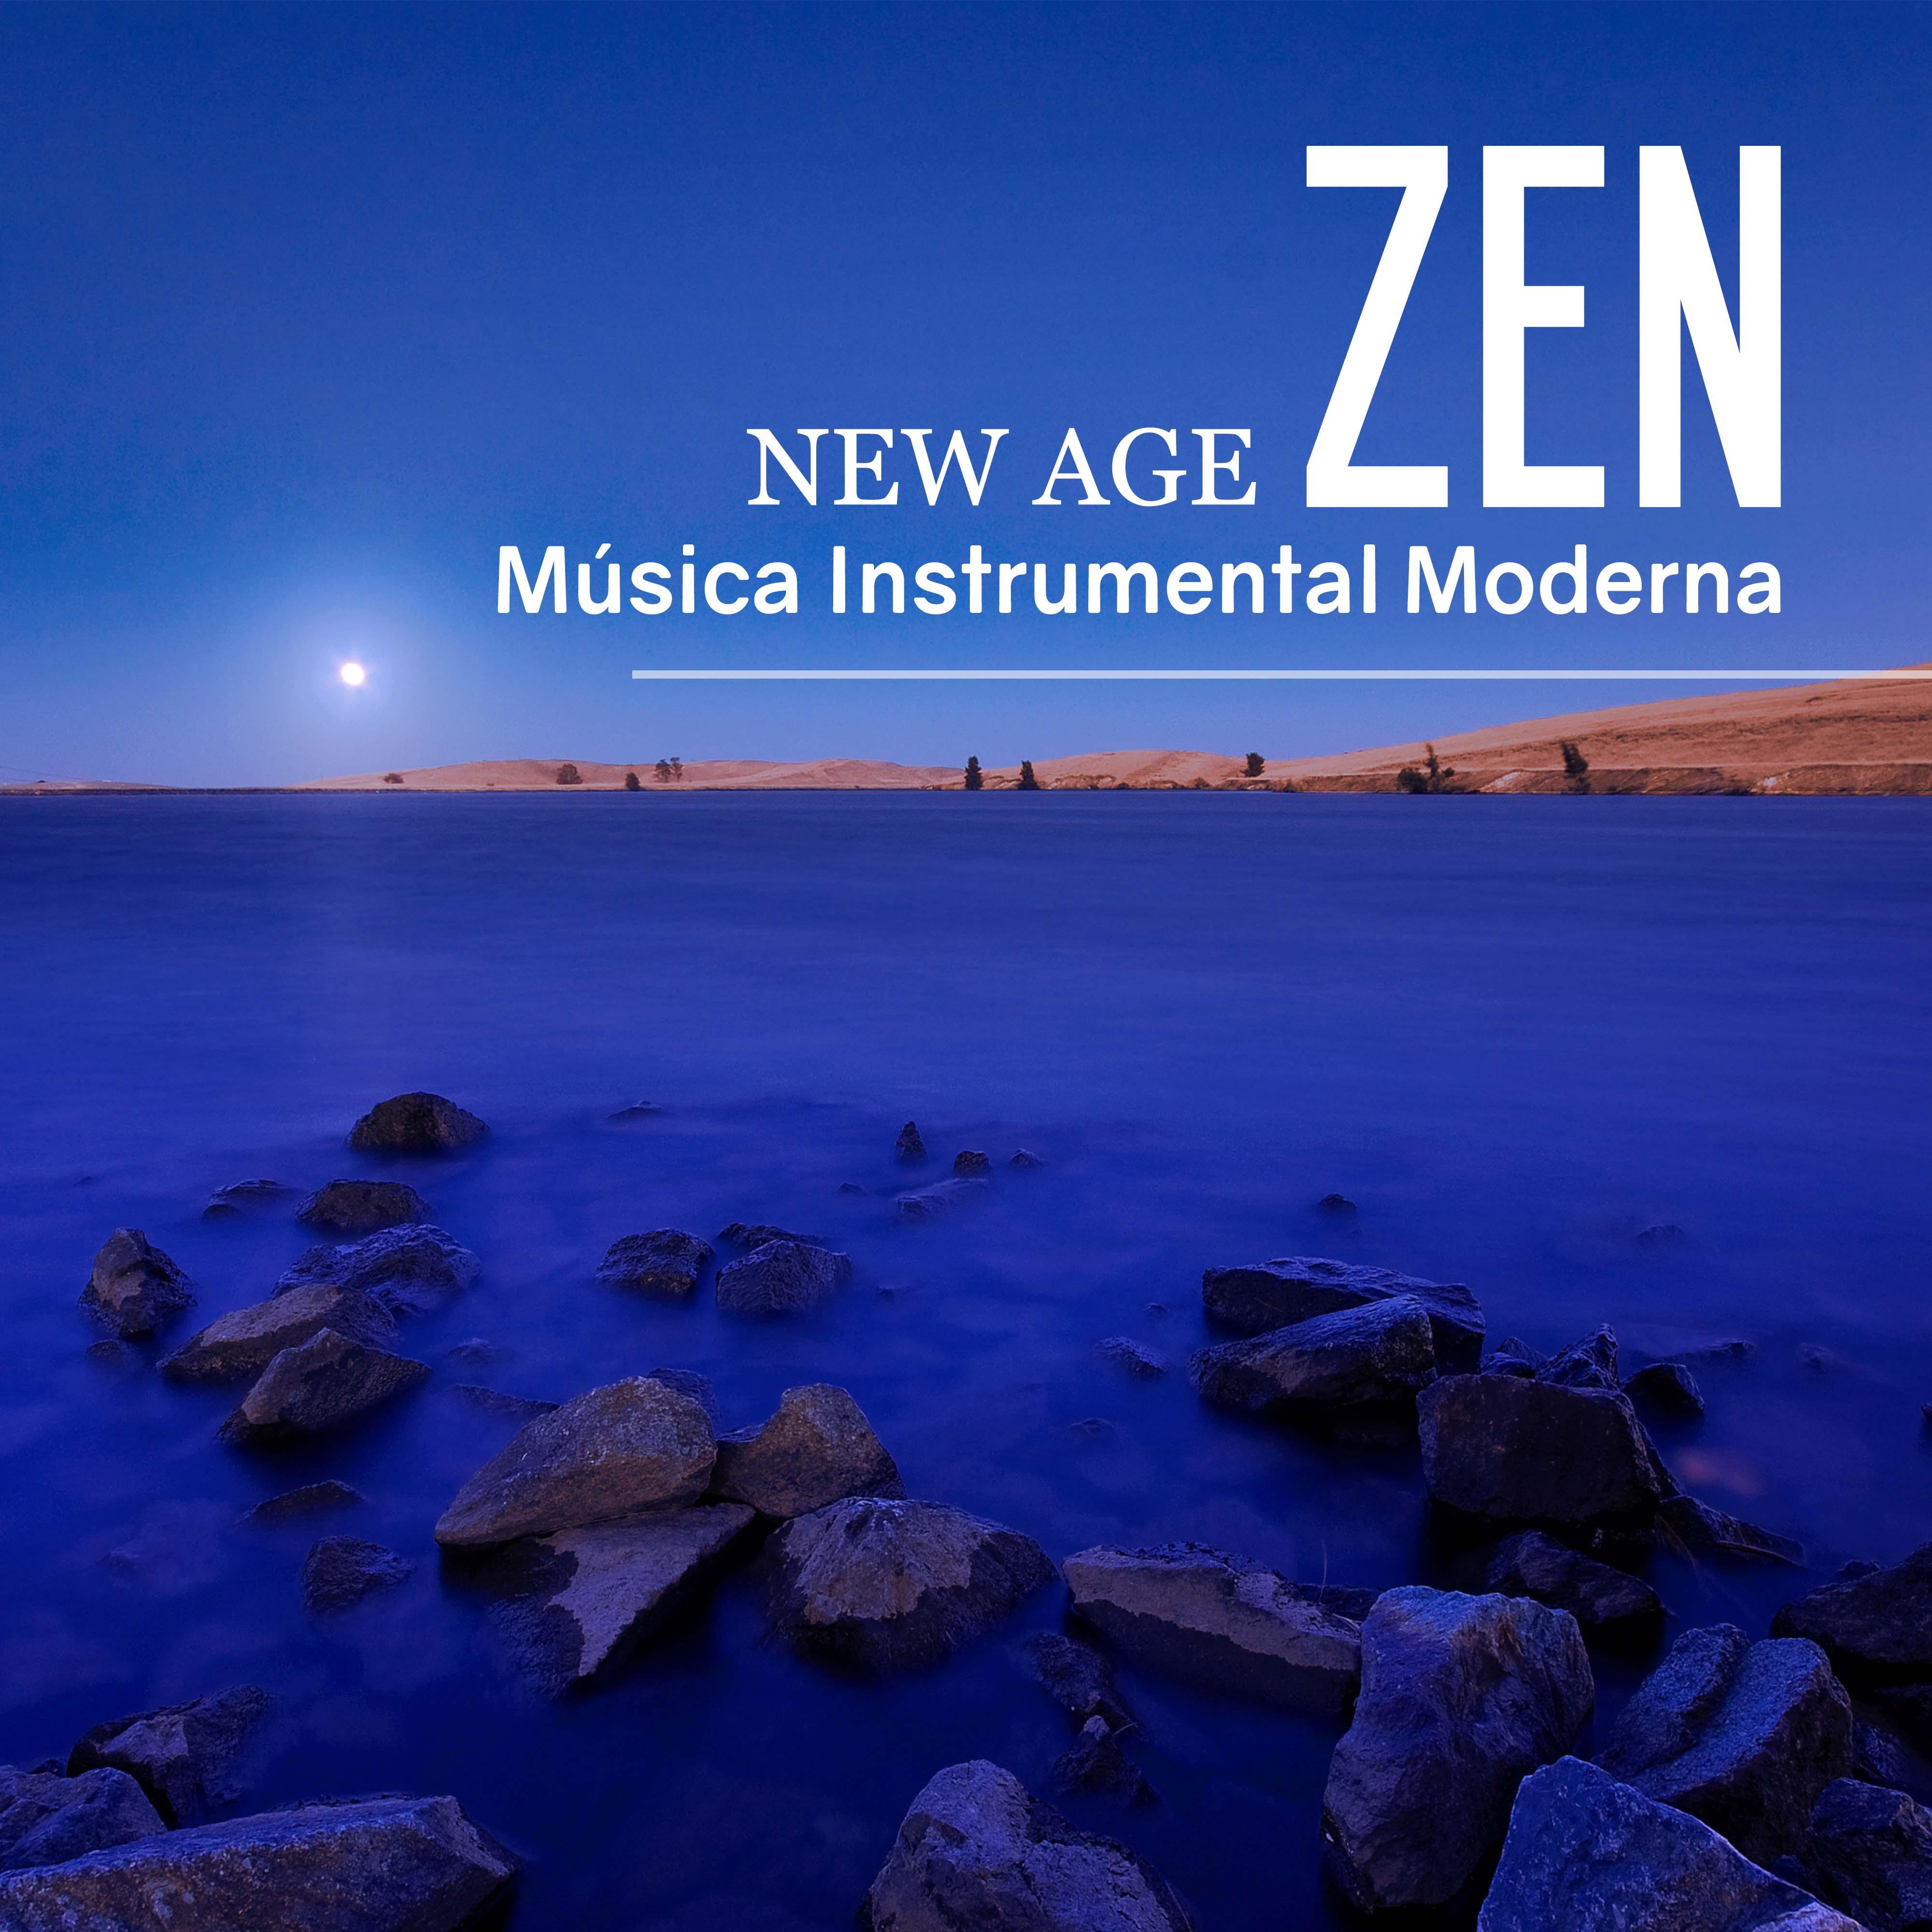 New Age Zen - Musica Instrumental Moderna - La Mejor Musica Instrumental